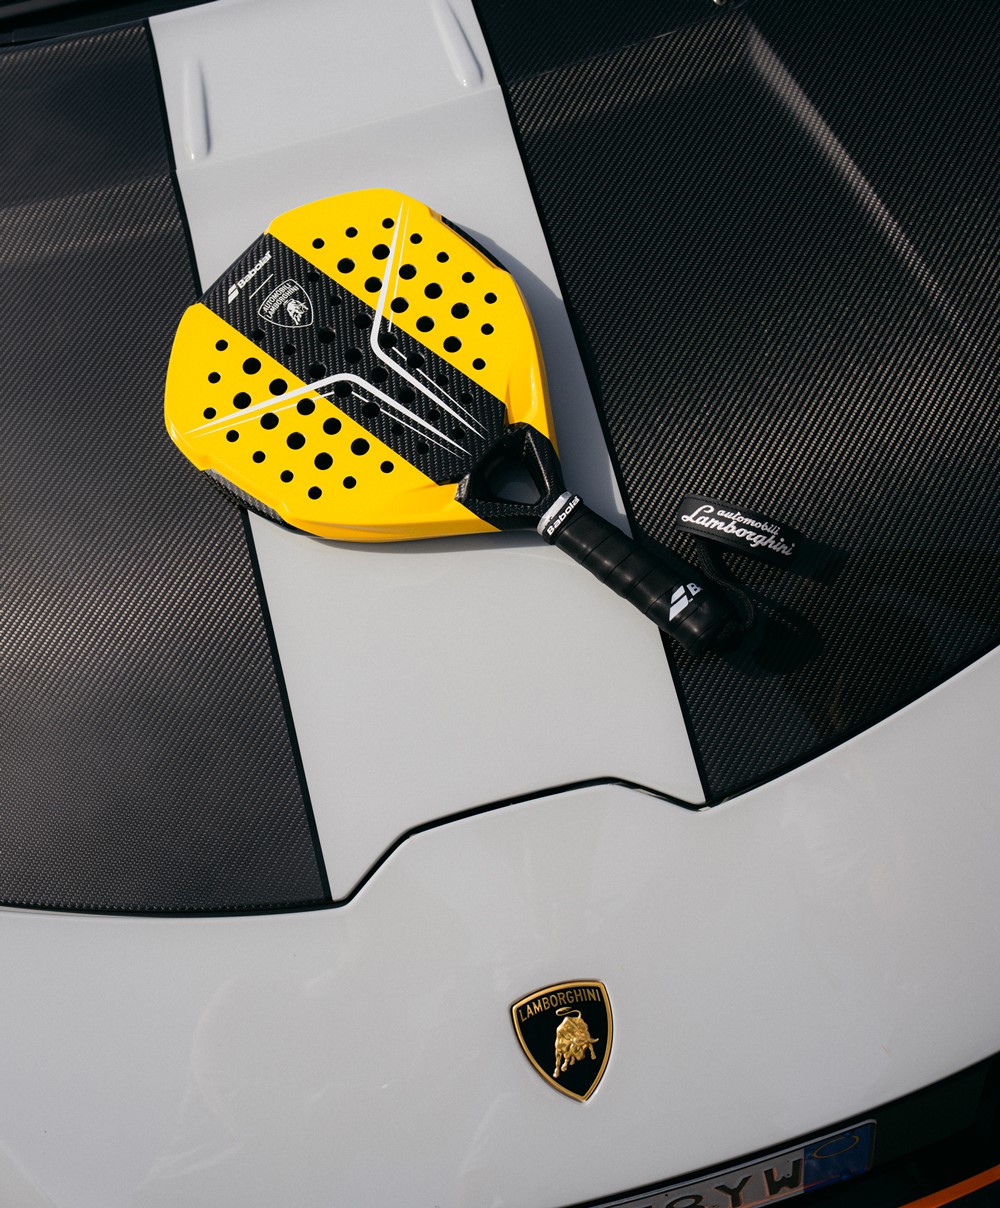 Nueva pala Babolat creada por Lamborghini